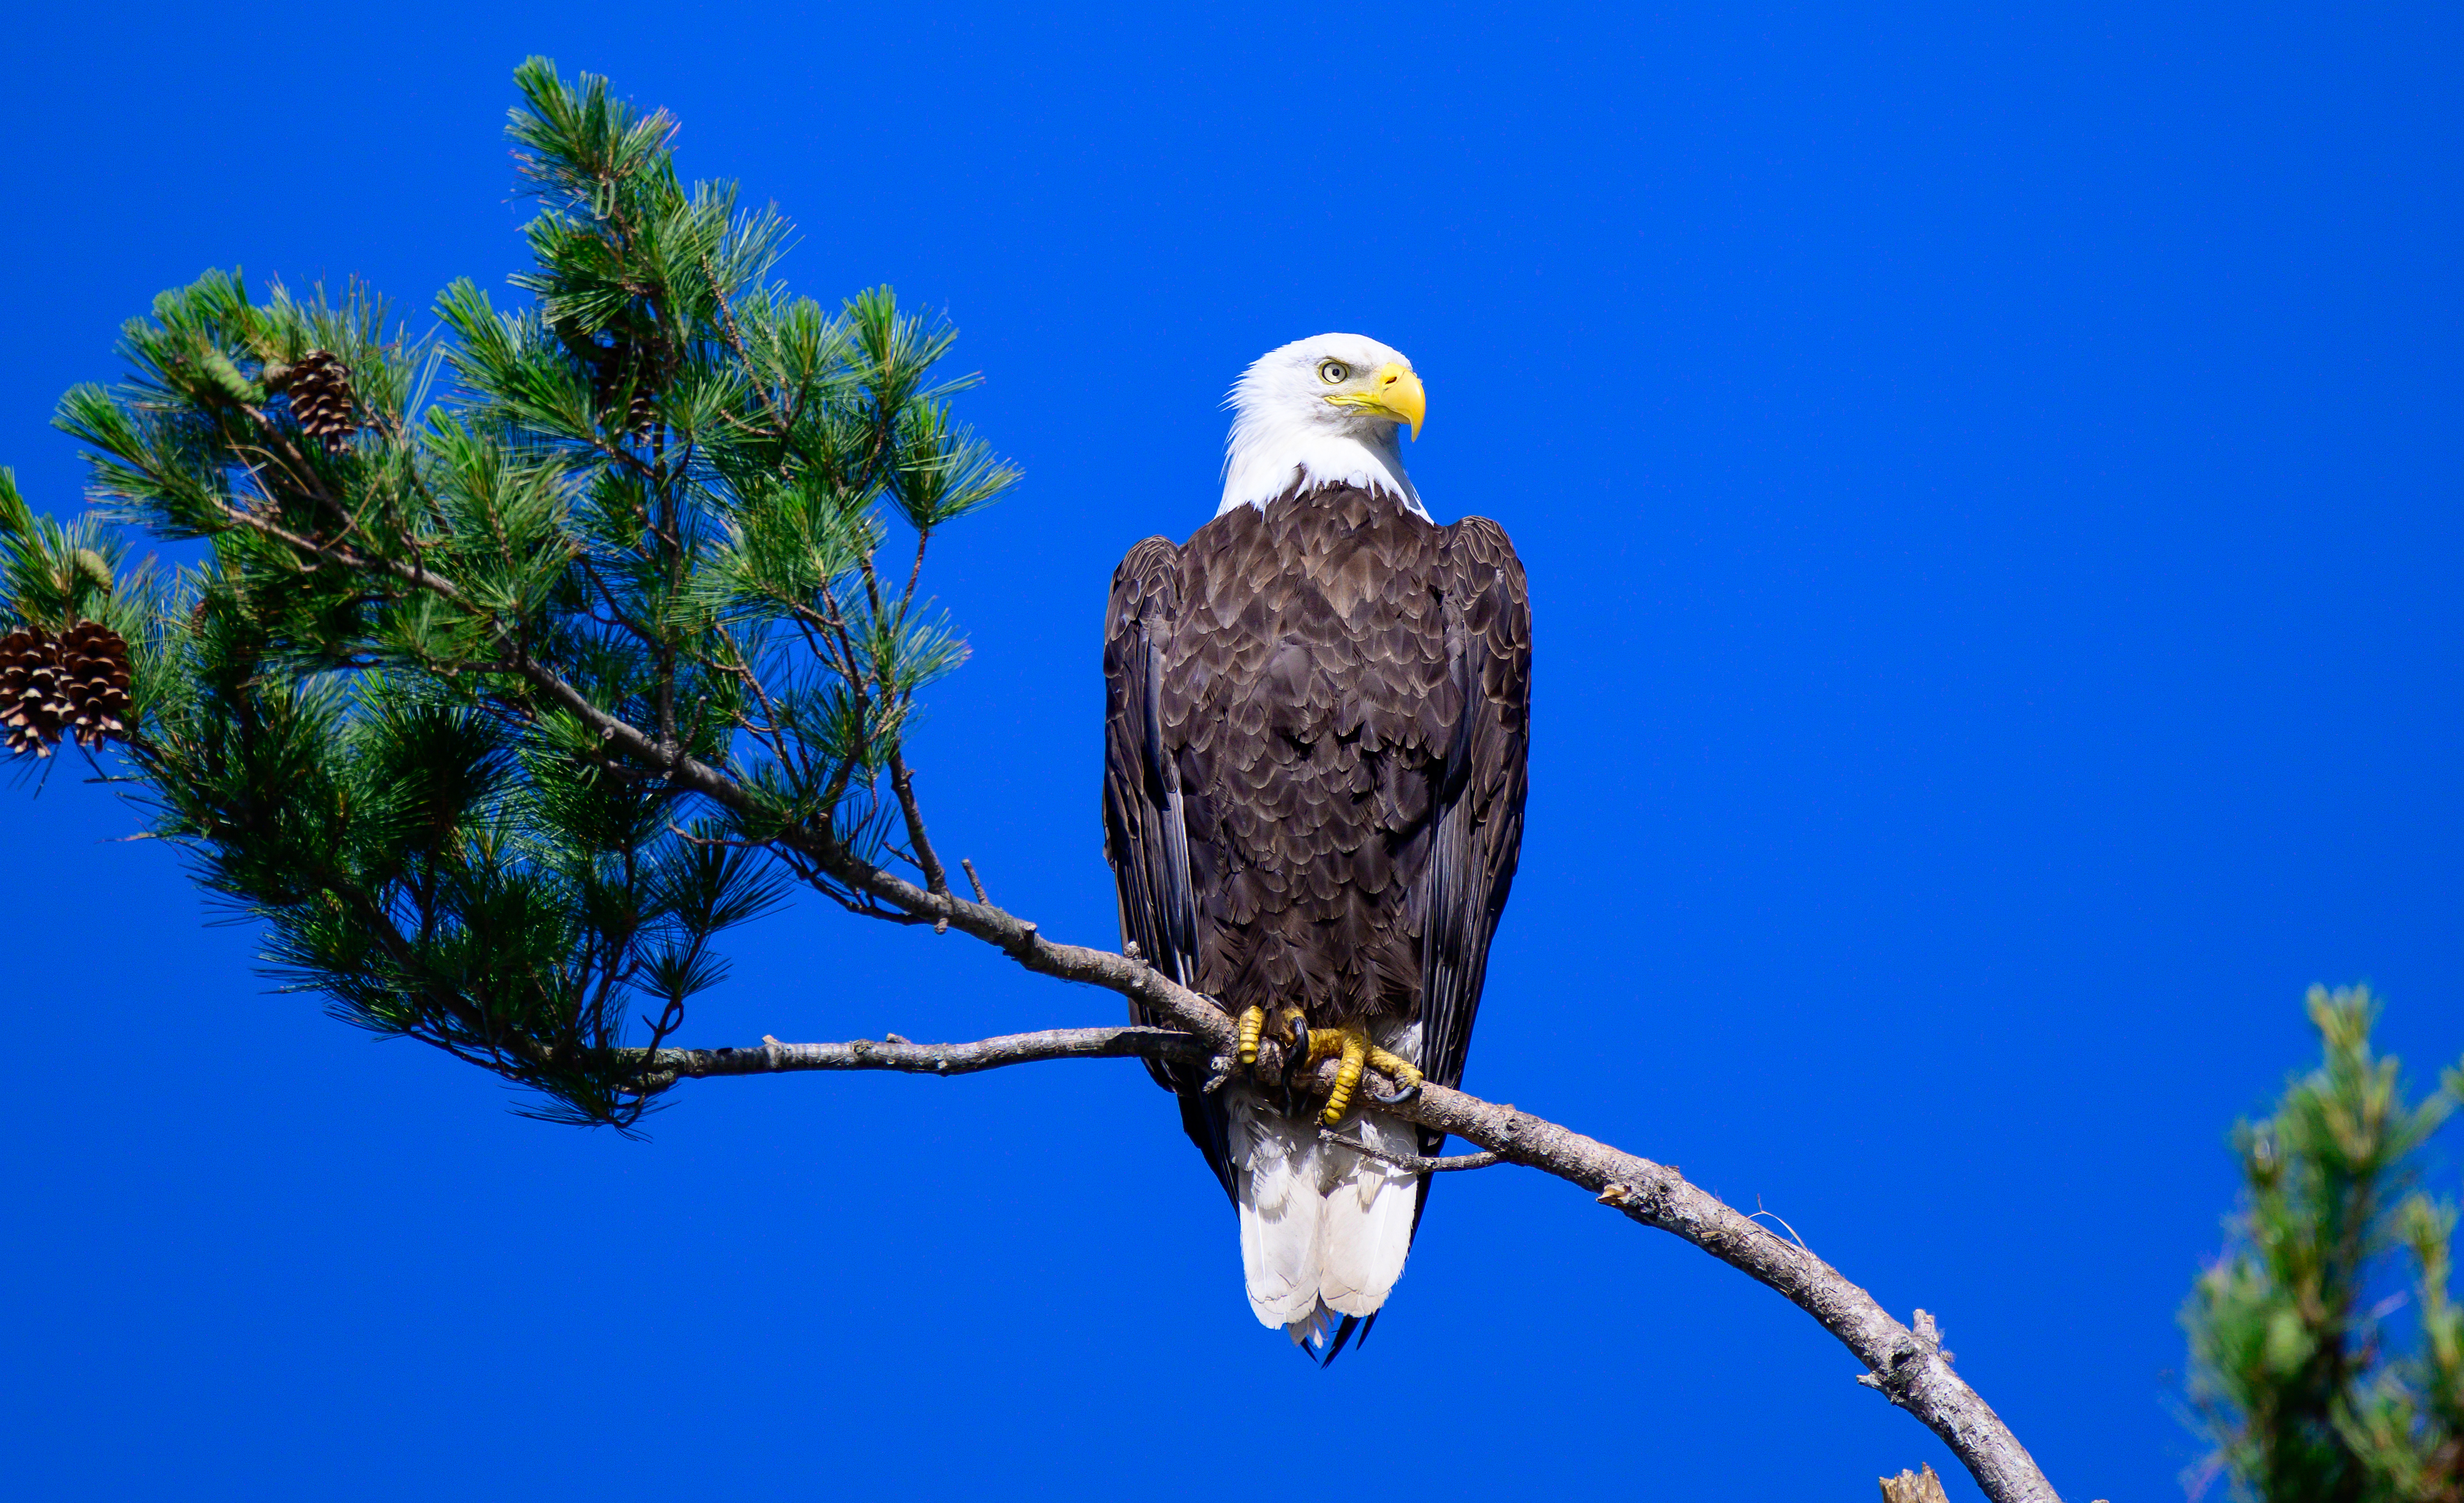 Bald eagle against blue sky